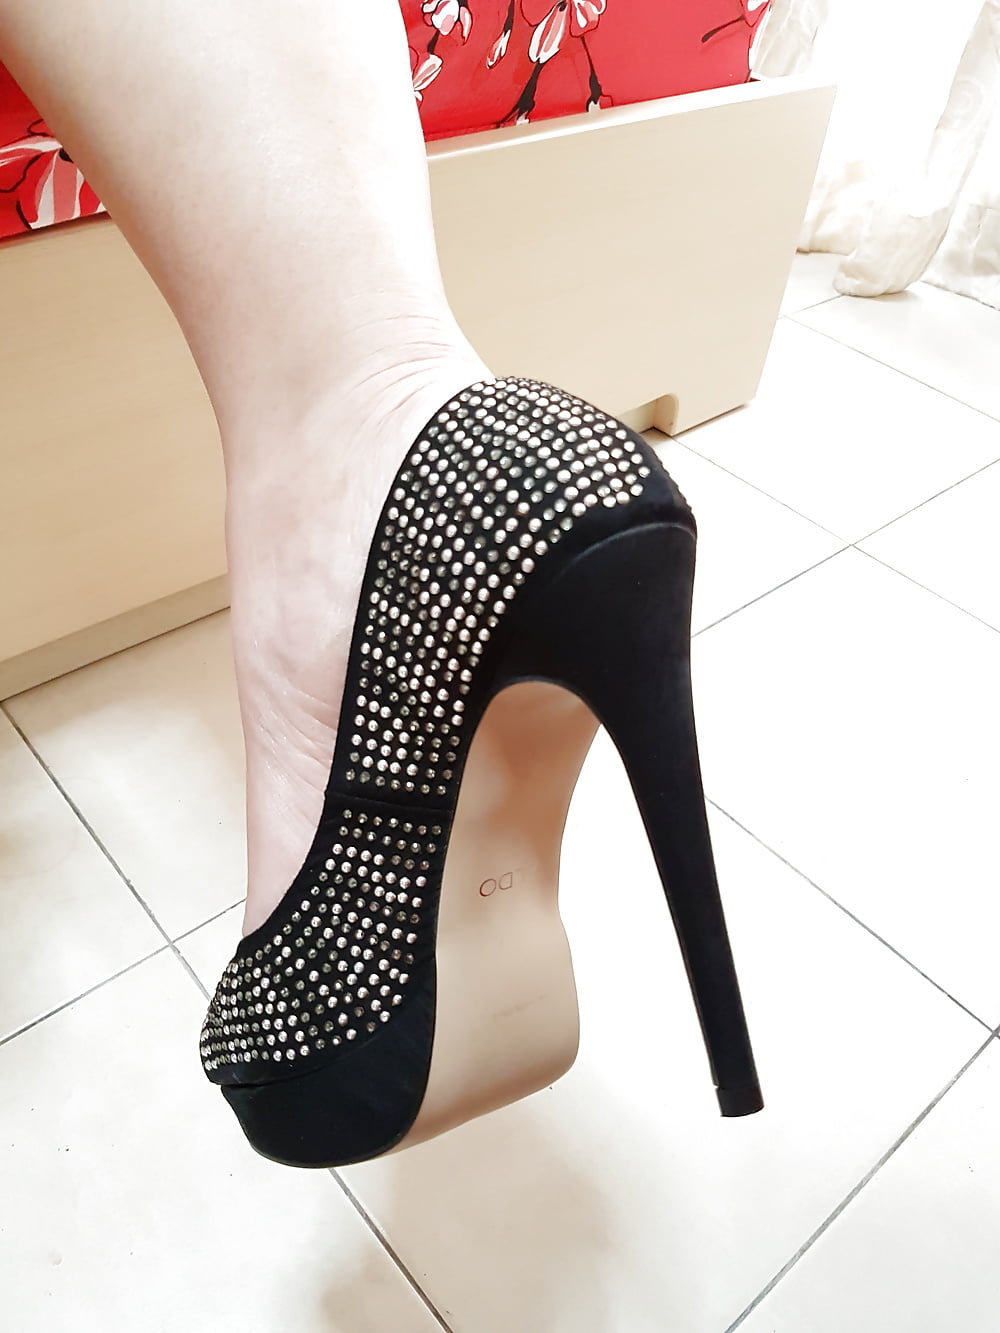 I love my sexy ALDO high heels in HD quality (3/5)